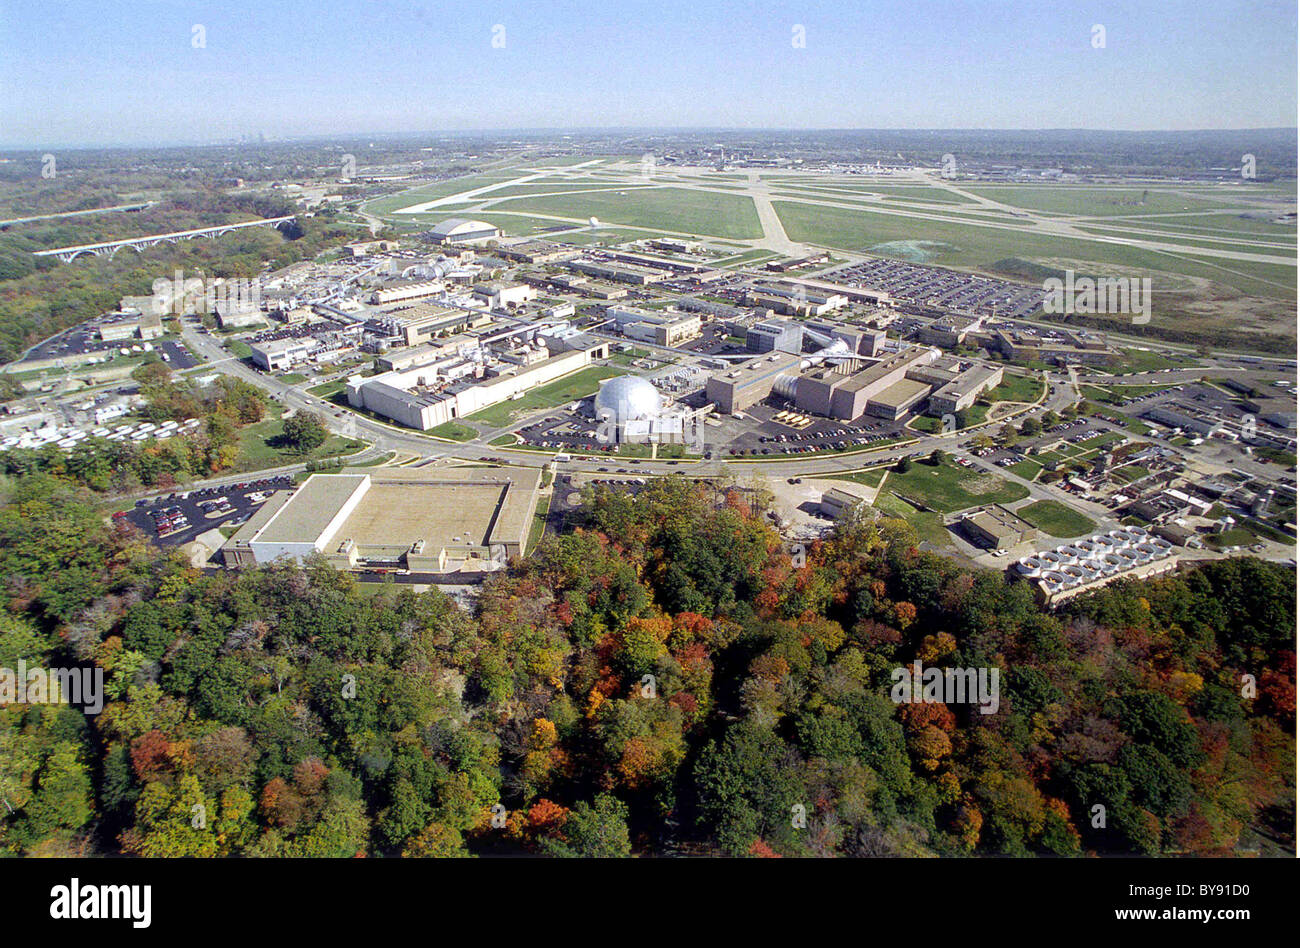 NASA John H. Glenn Forschungszentrum bei Lewis Field, Cleveland, Ohio. Stockfoto